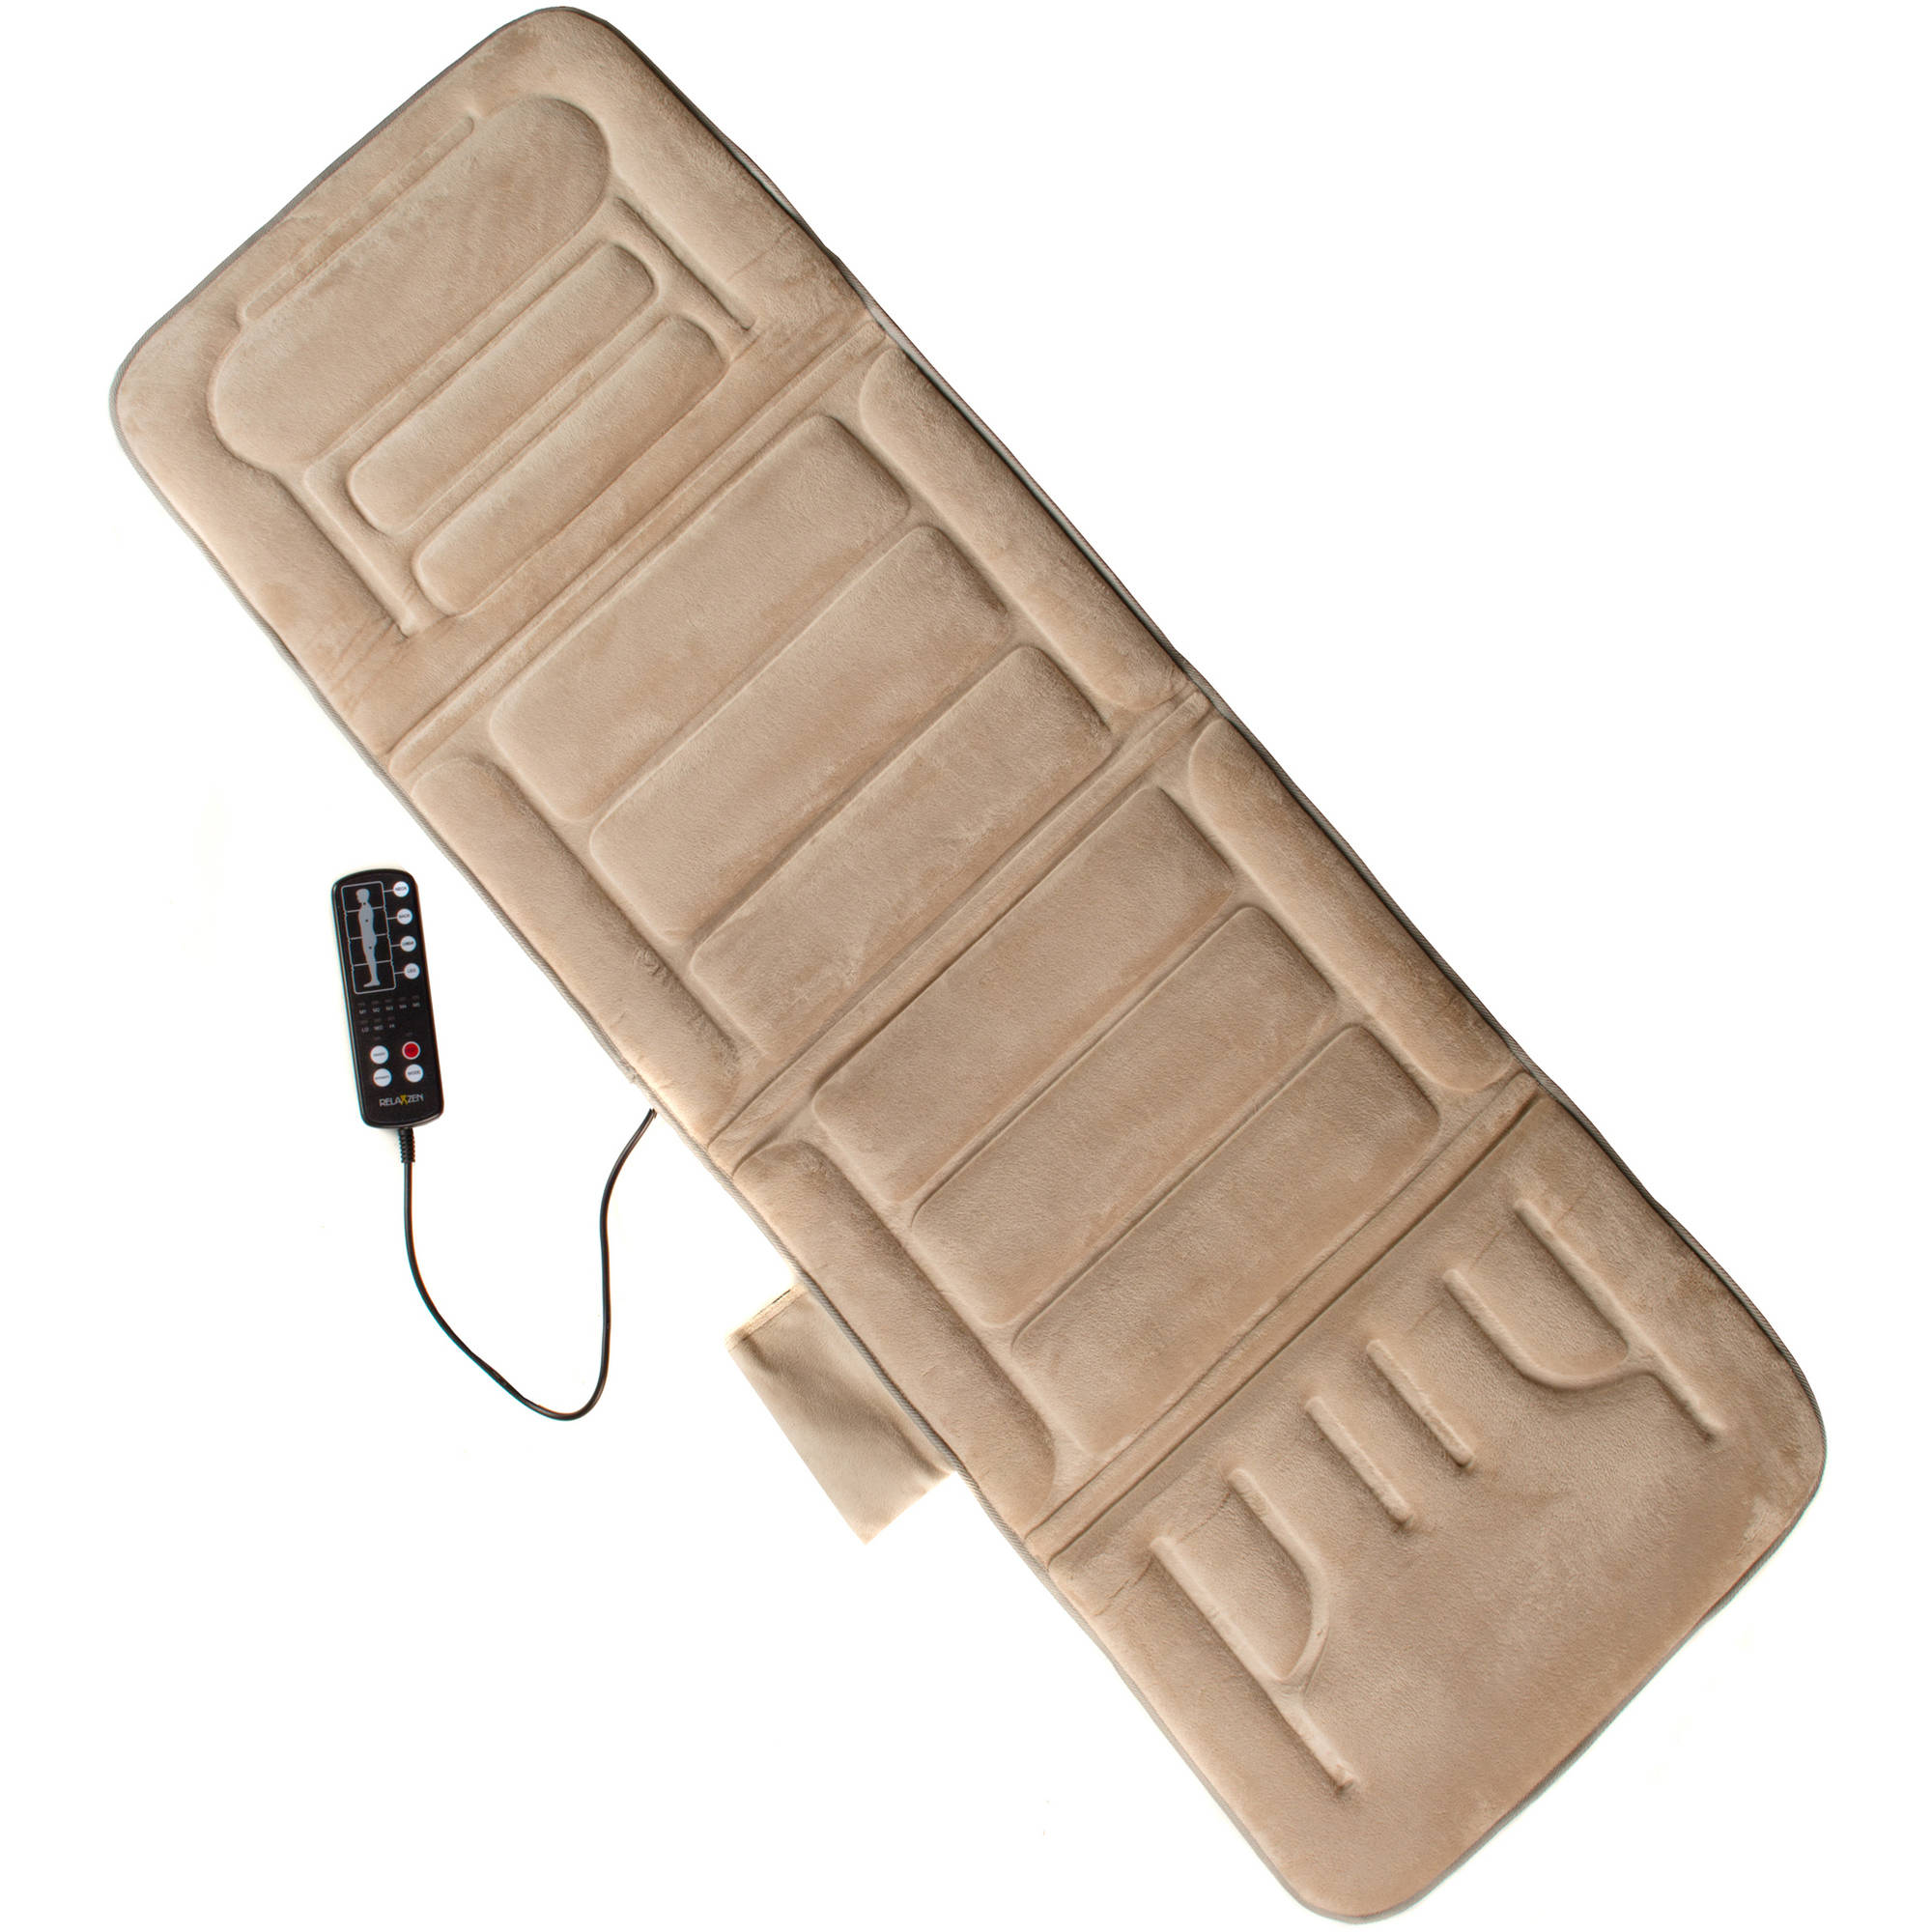 Relaxzen 10-Motor Seat Cushion Massager Mat w/ Heat, Beige - image 1 of 3